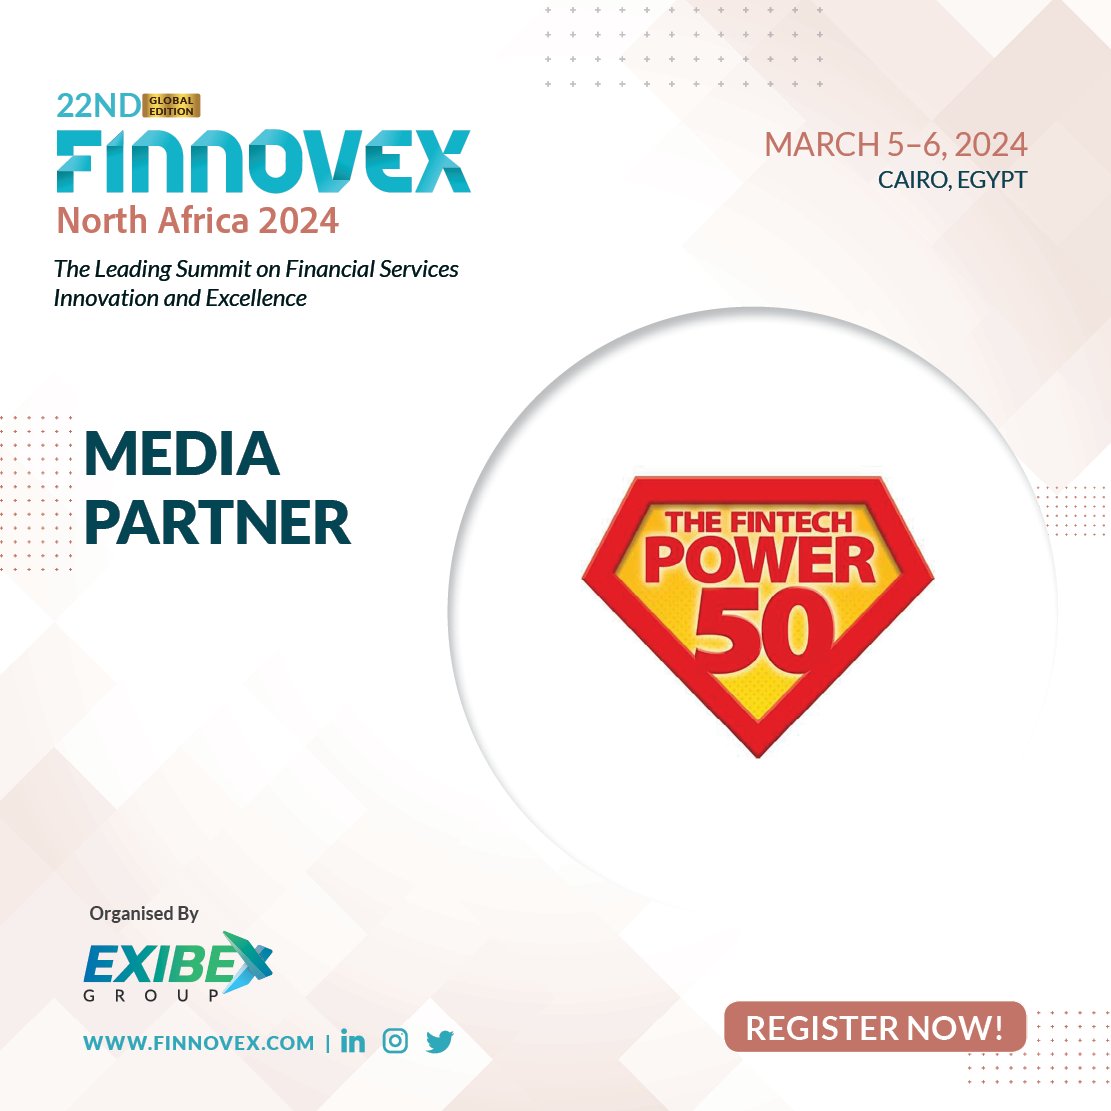 𝗪𝗲'𝗿𝗲 𝘁𝗵𝗿𝗶𝗹𝗹𝗲𝗱 𝘁𝗼 𝗮𝗻𝗻𝗼𝘂𝗻𝗰𝗲 𝗼𝘂𝗿 𝗲𝘀𝘁𝗲𝗲𝗺𝗲𝗱 𝗺𝗲𝗱𝗶𝗮 𝗽𝗮𝗿𝘁𝗻𝗲𝗿 𝗳𝗼𝗿 #Finnovex 𝗡𝗼𝗿𝘁𝗵 𝗔𝗳𝗿𝗶𝗰𝗮 – 𝘁𝗵𝗲 𝗿𝗲𝗻𝗼𝘄𝗻𝗲𝗱 @TheFintechPower50 #Fintechpower50 #finnovexNA #mediapartner #cairoegypt